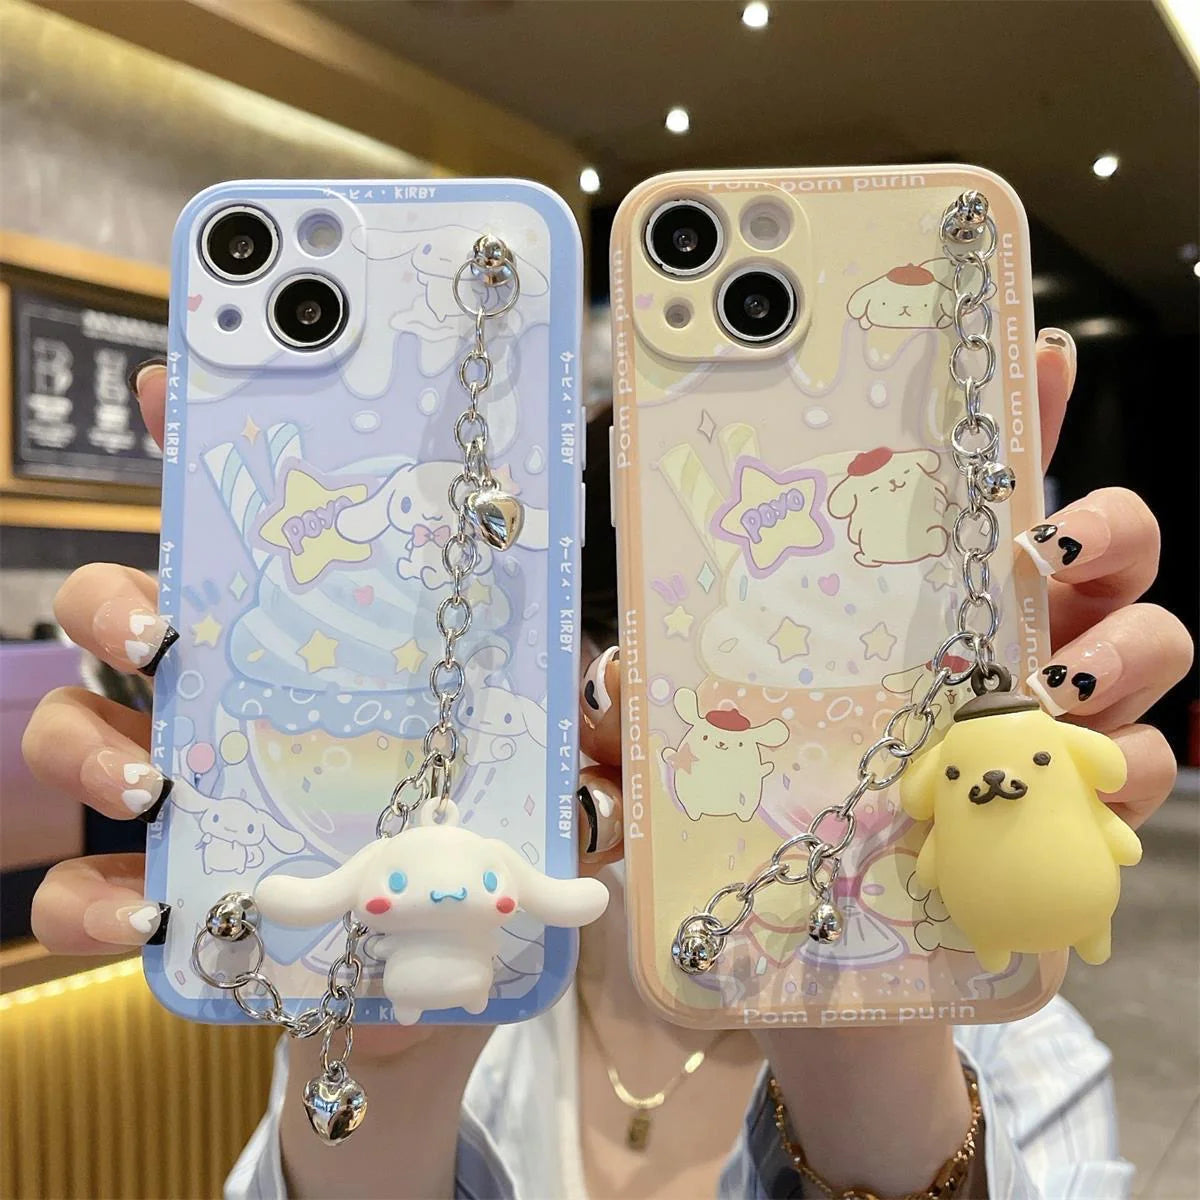 Sanrio Phone Case with Figure Charm